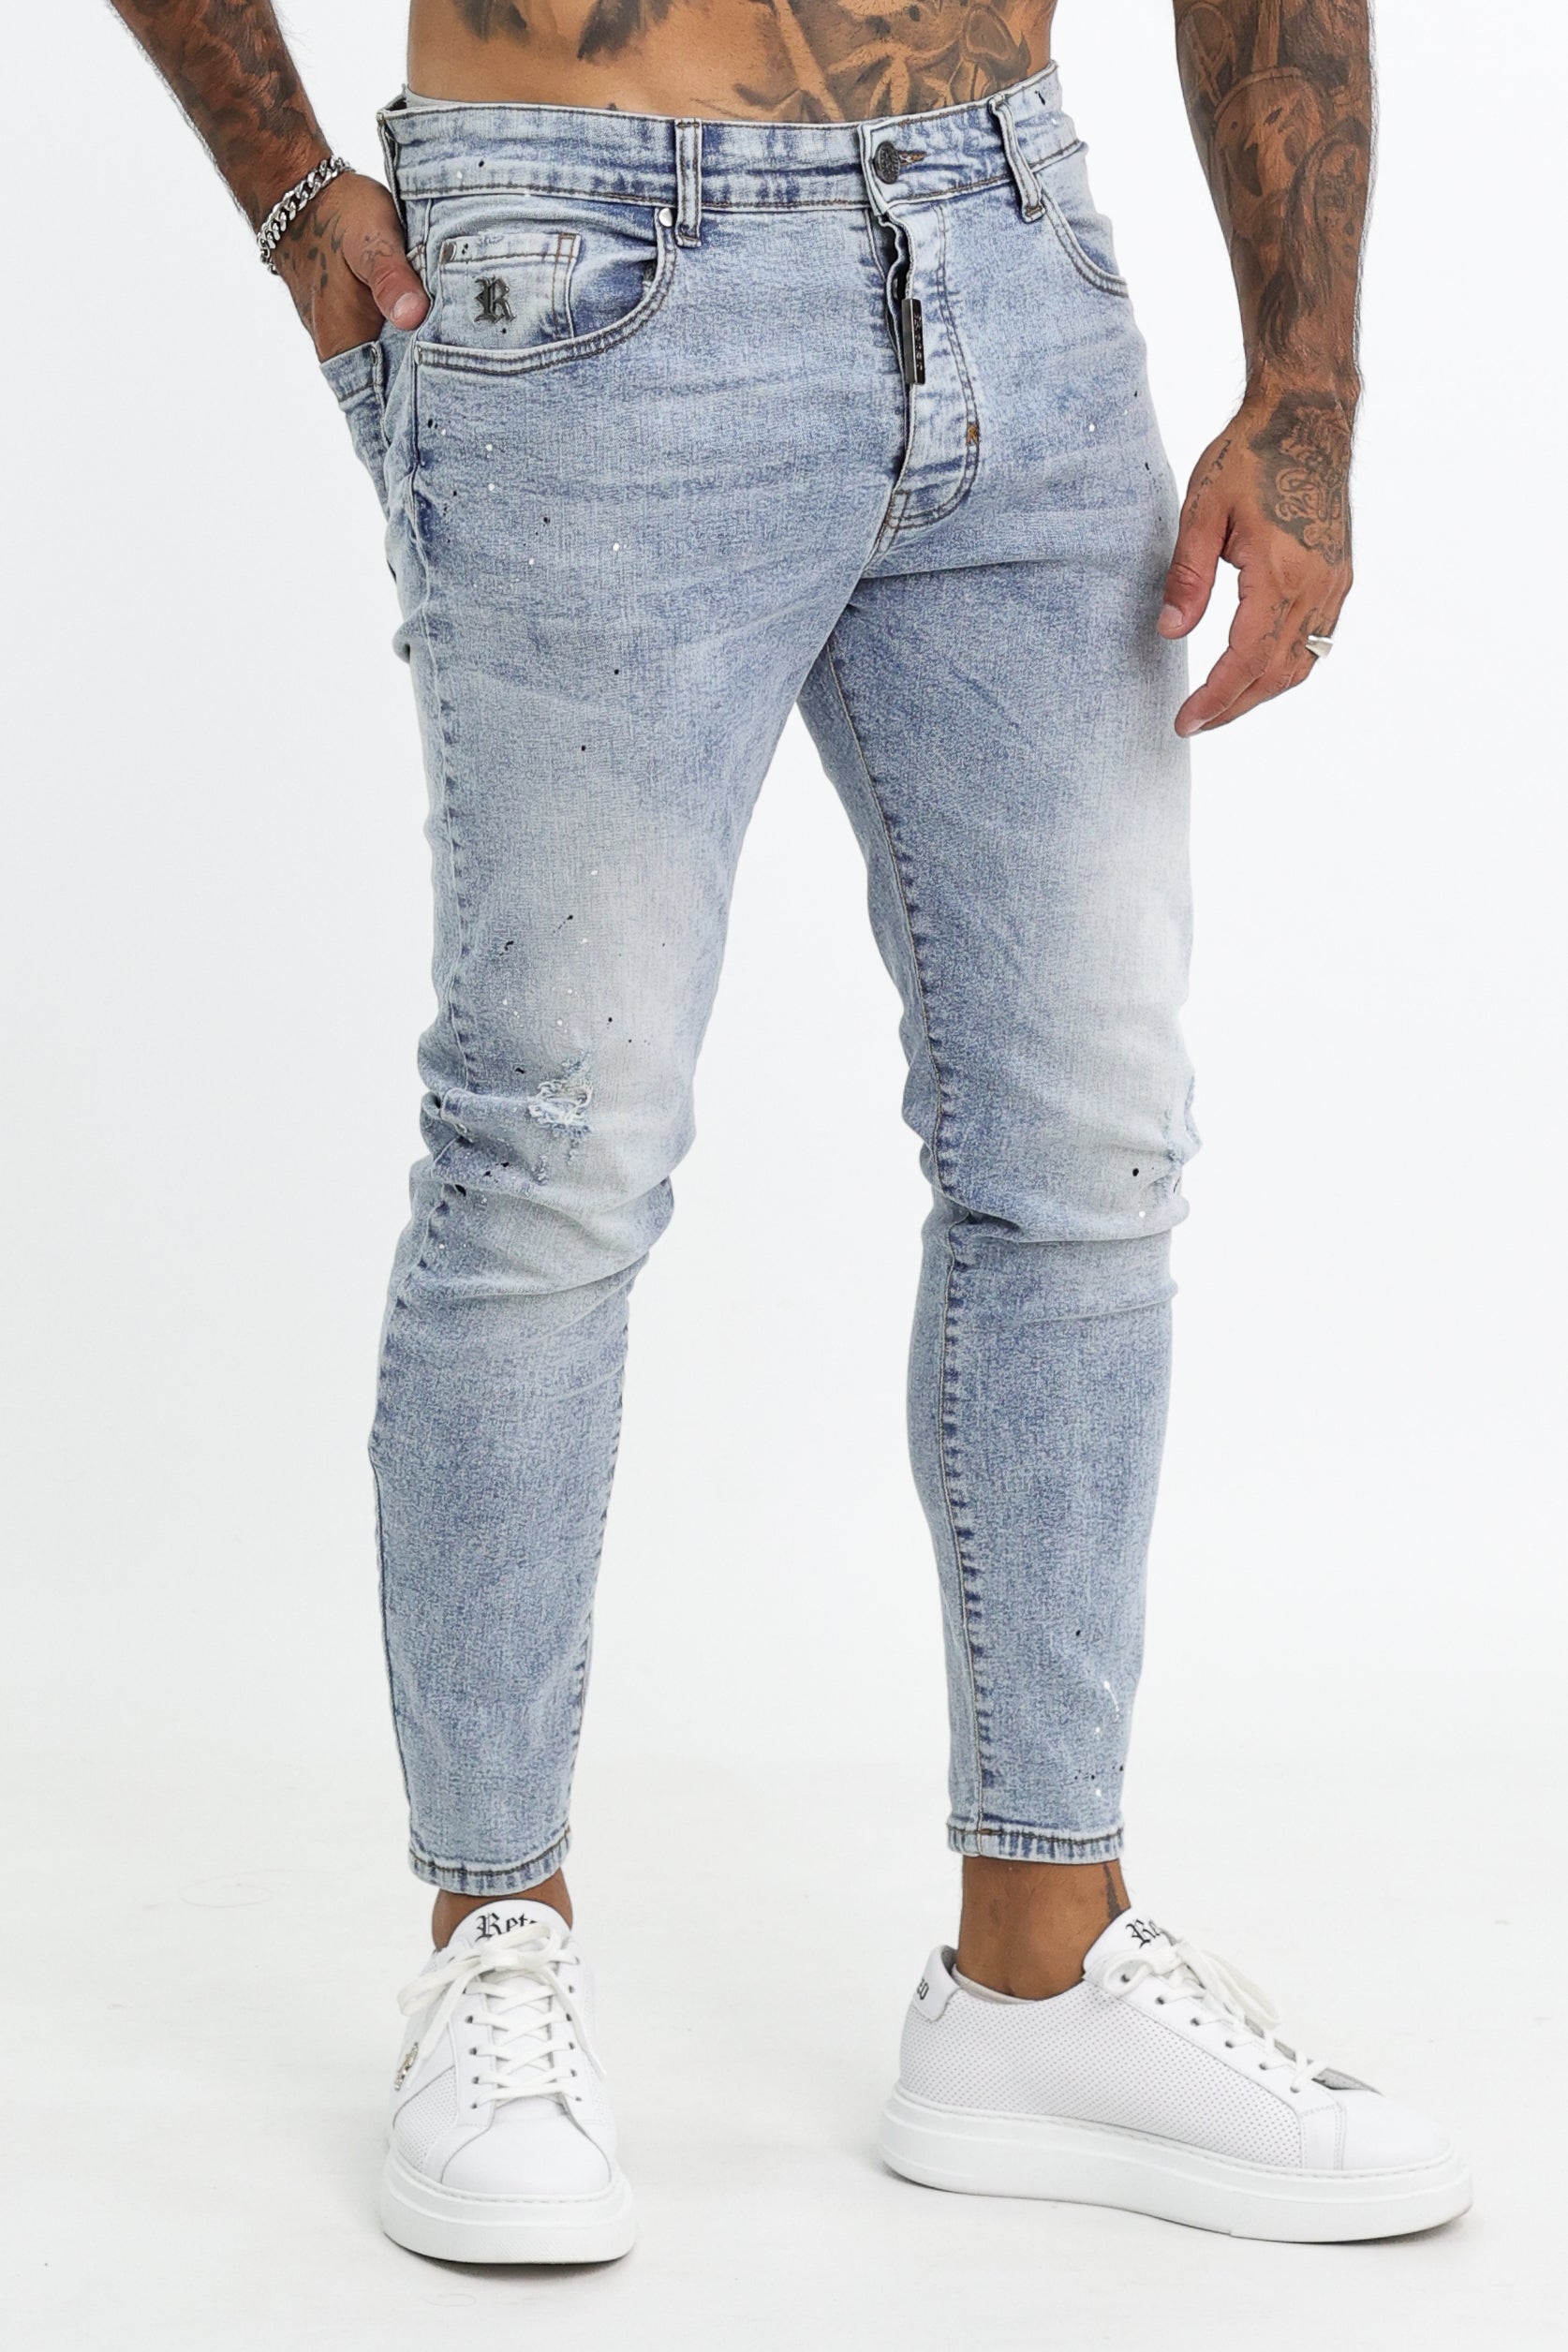 Aquino Jeans